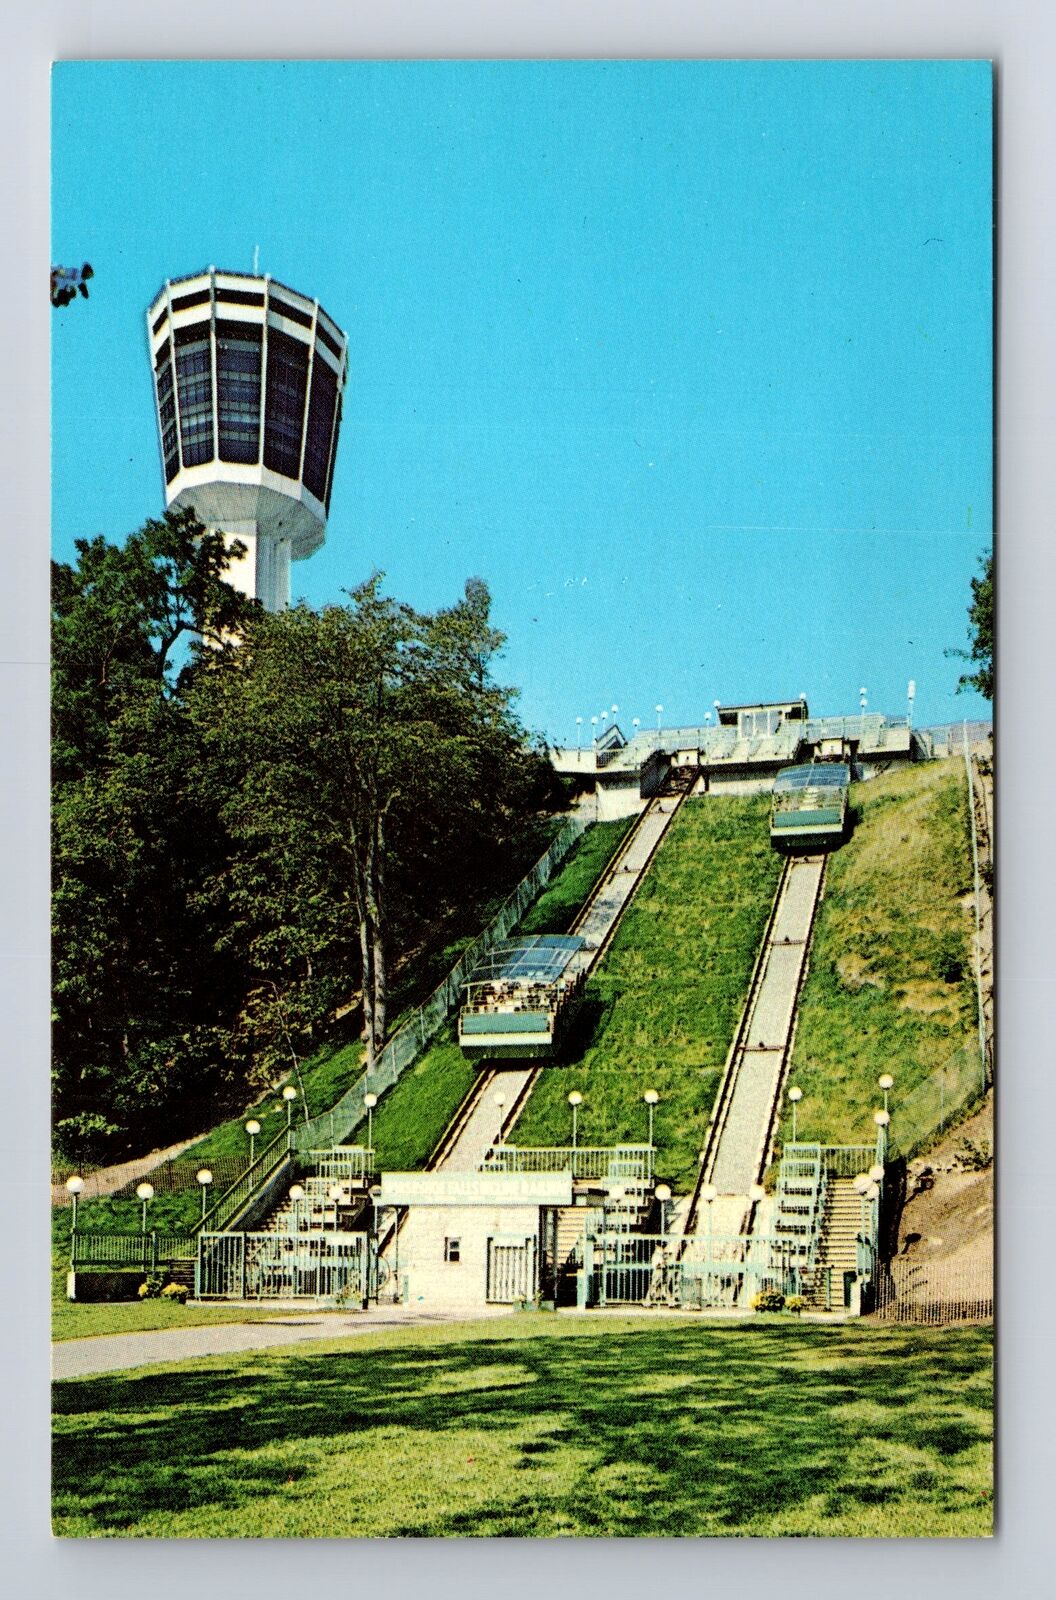 Niagara Falls Ontario-Canada, Horseshoe Falls Incline Railway, Vintage Postcard